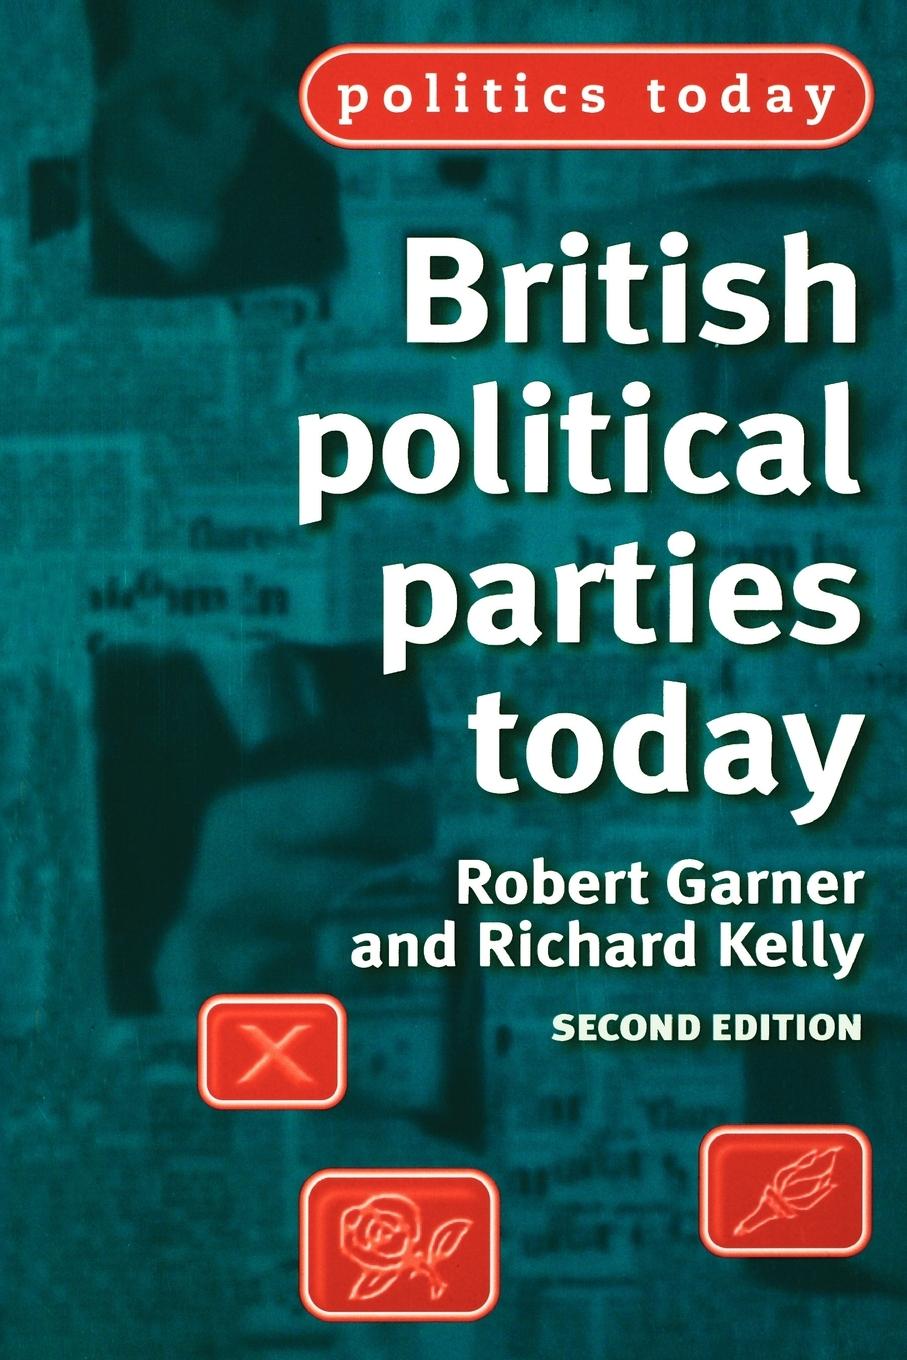 British political parties today - Garner, Robert Kelly, Richard